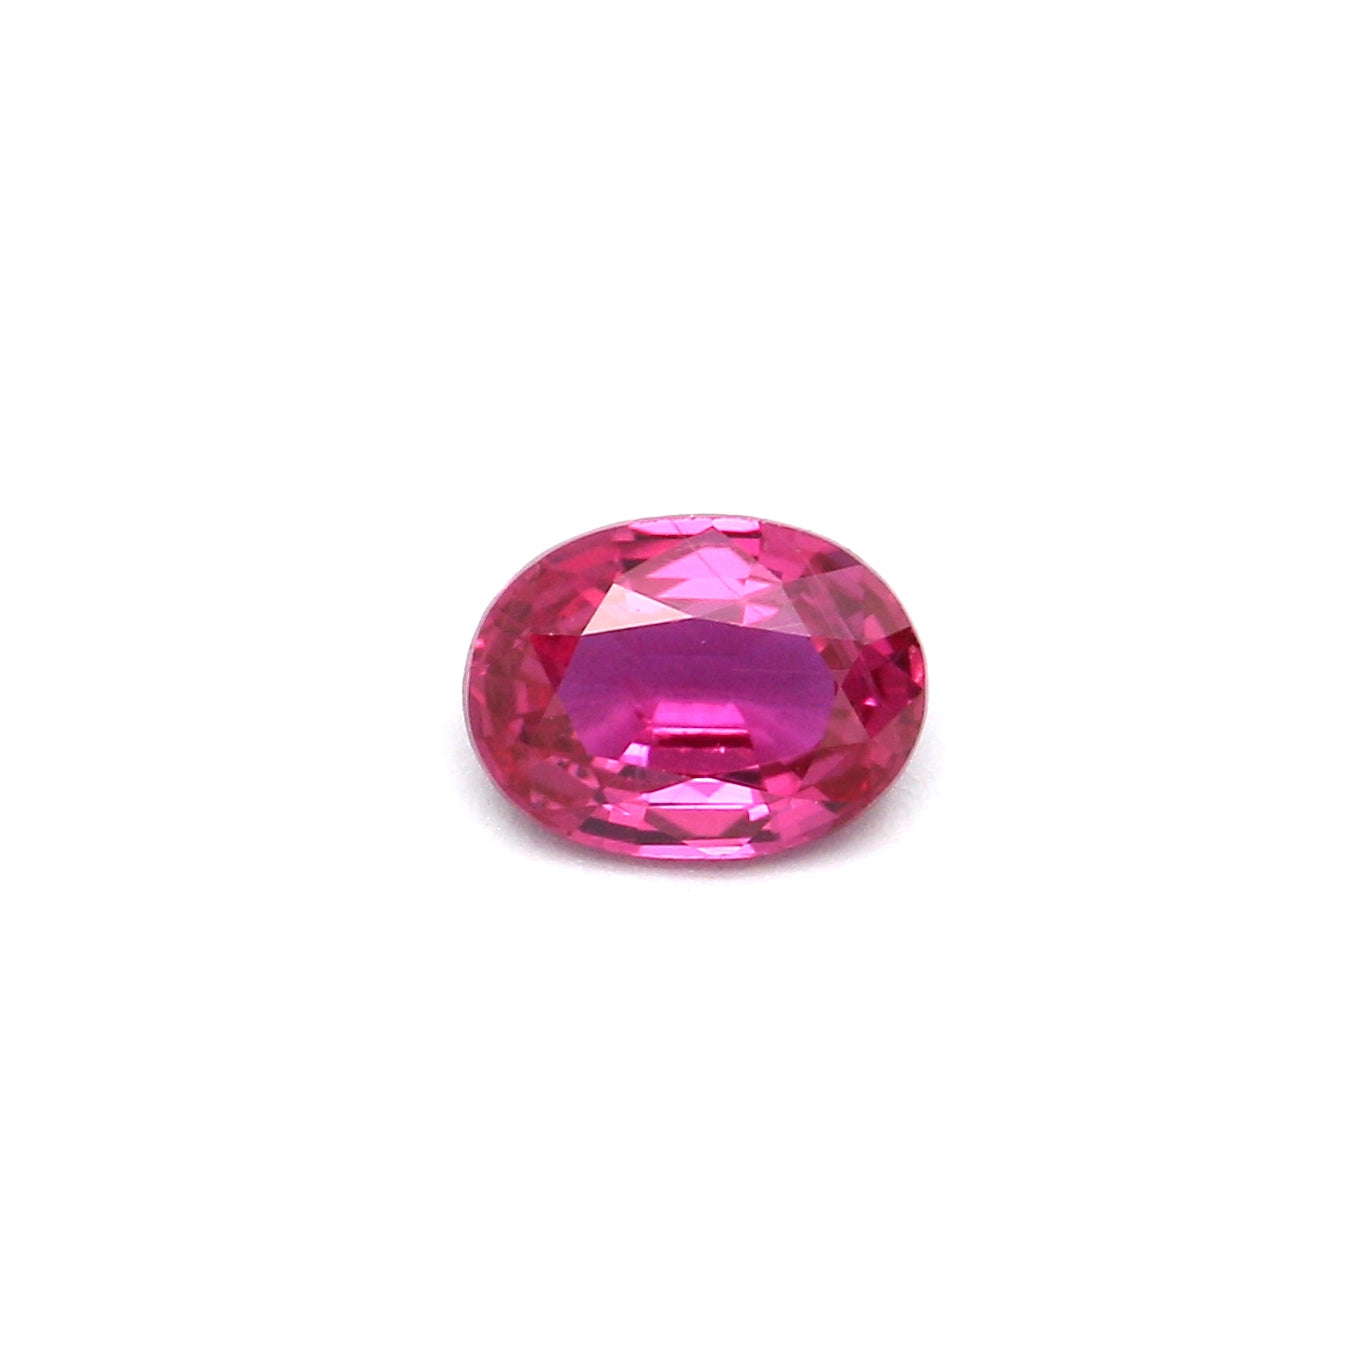 0.36ct Purplish Pink, Oval Sapphire, Heated, Basaltic - 5.12 x 3.79 x 2.11mm